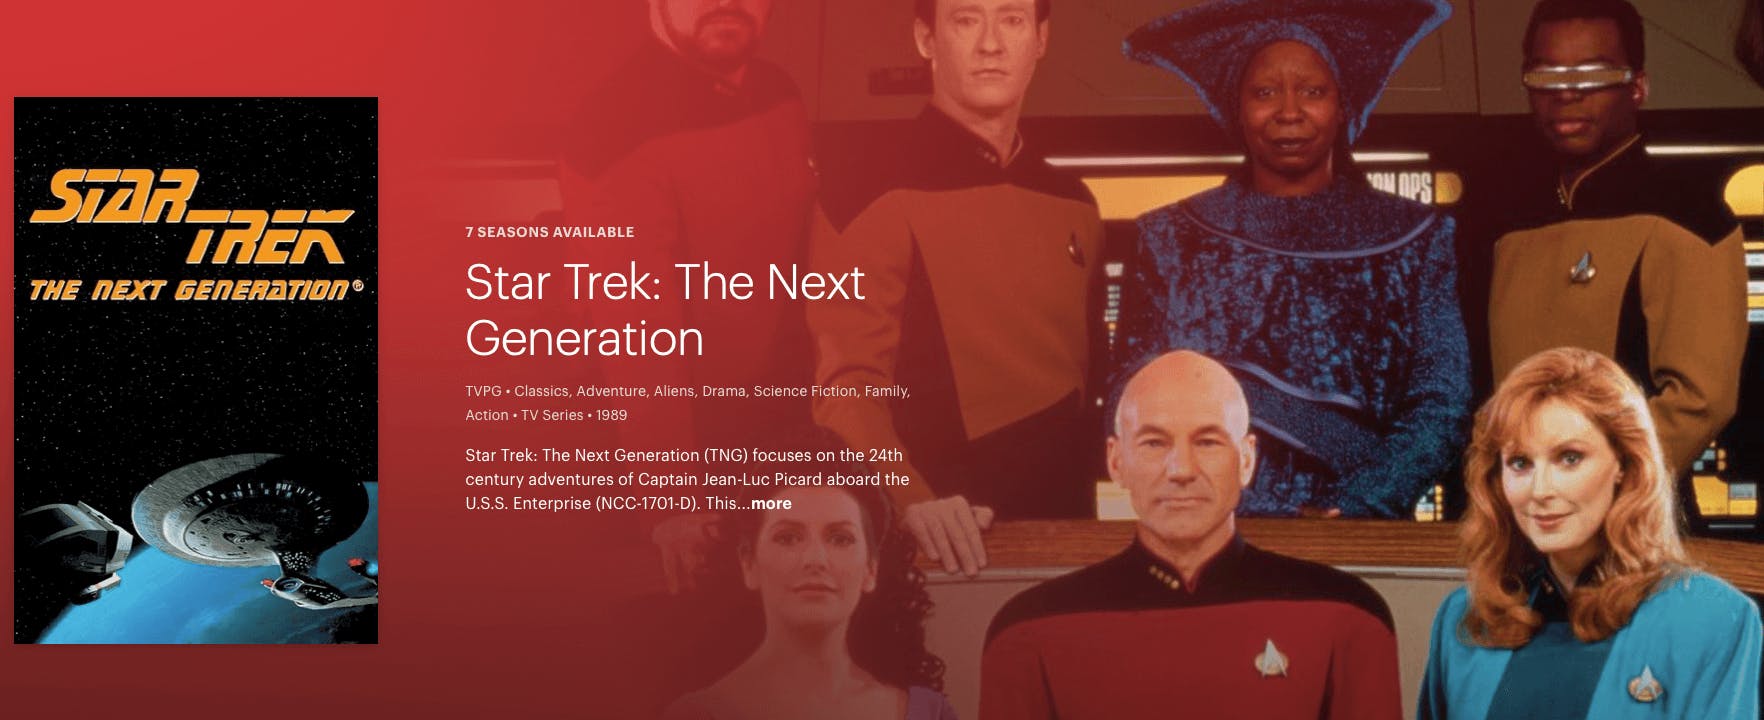 watch Star Trek the next generation on Hulu